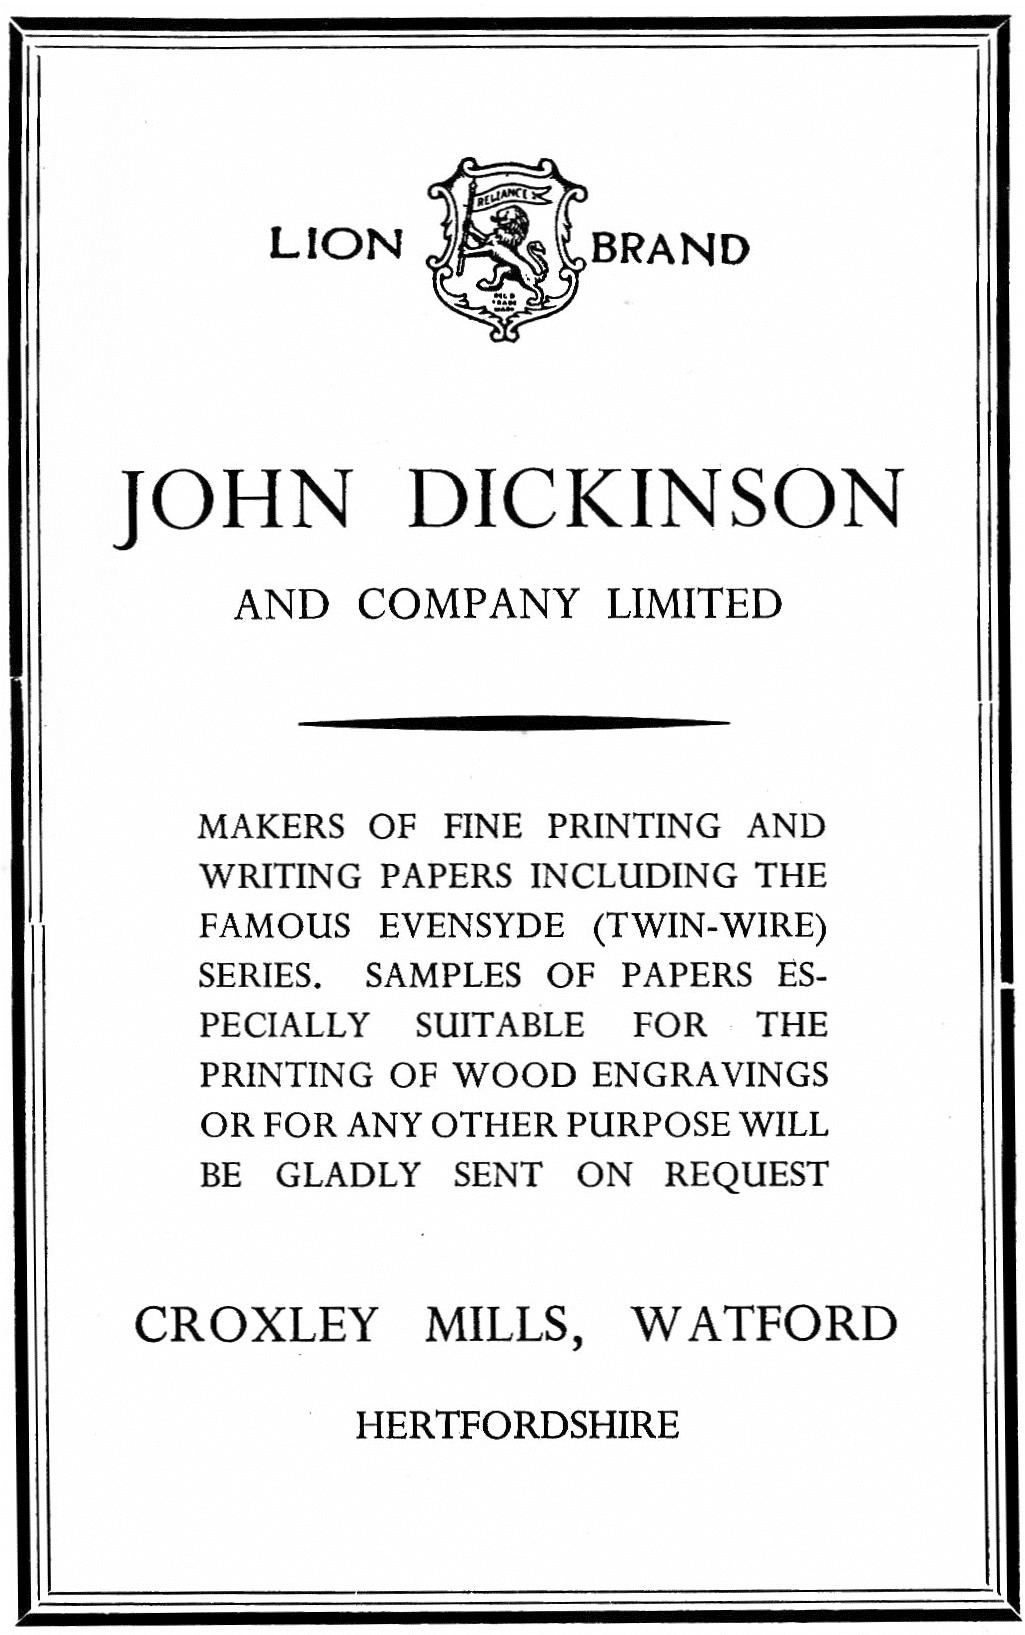 John Dickinson and Company advertisement